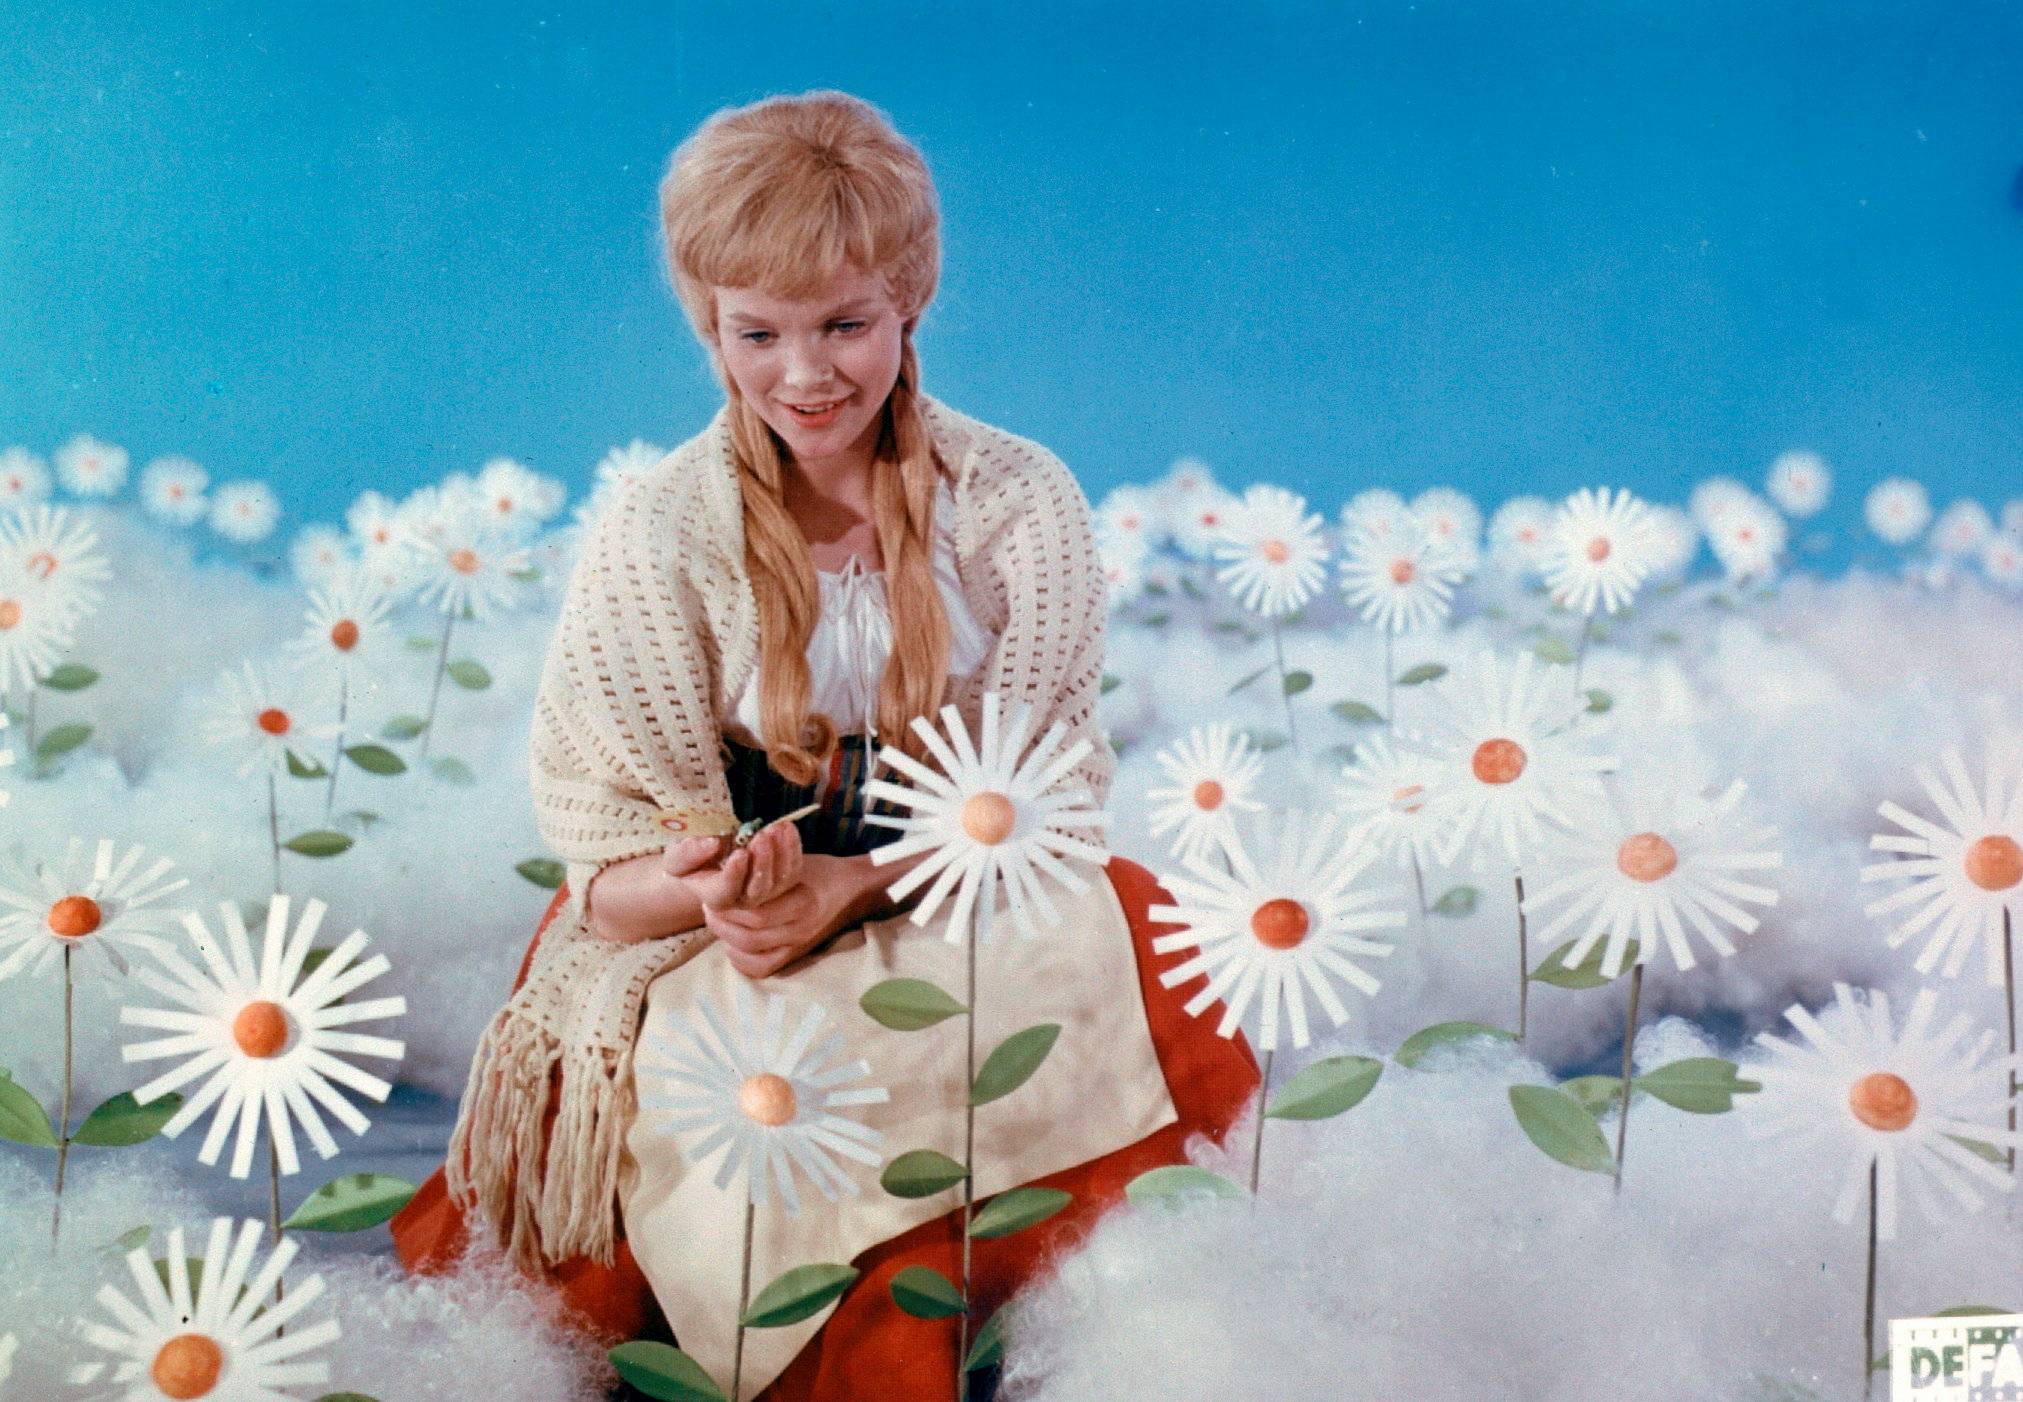 Frau Holle (1963) (Filmjuwelen / DEFA-Märchen)